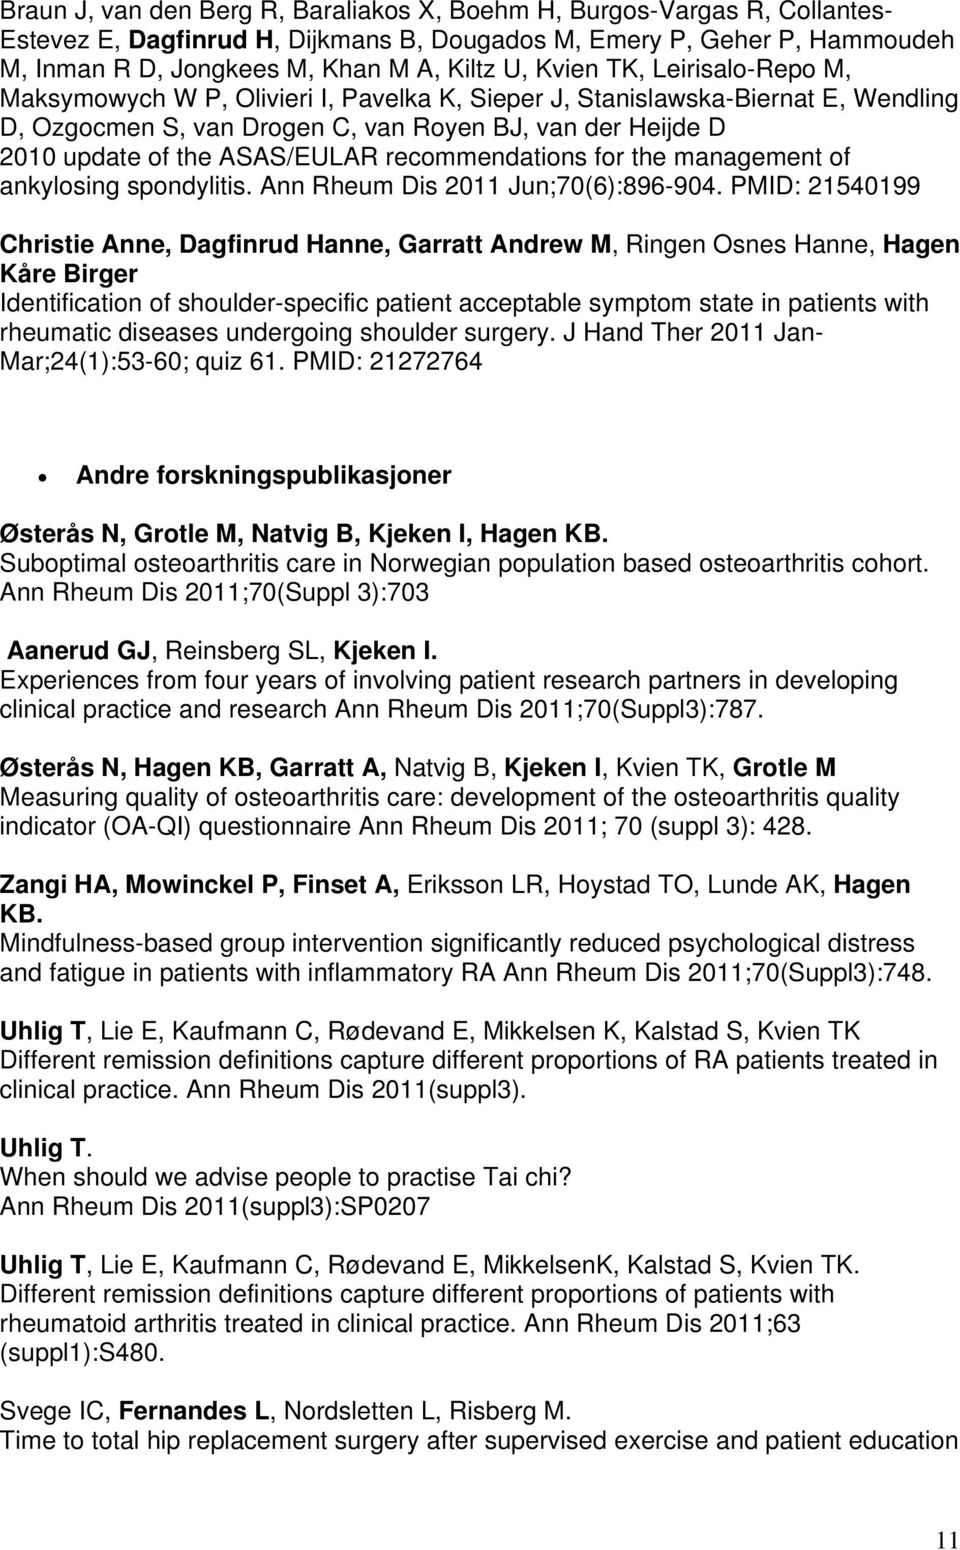 ASAS/EULAR recommendations for the management of ankylosing spondylitis. Ann Rheum Dis 2011 Jun;70(6):896-904.